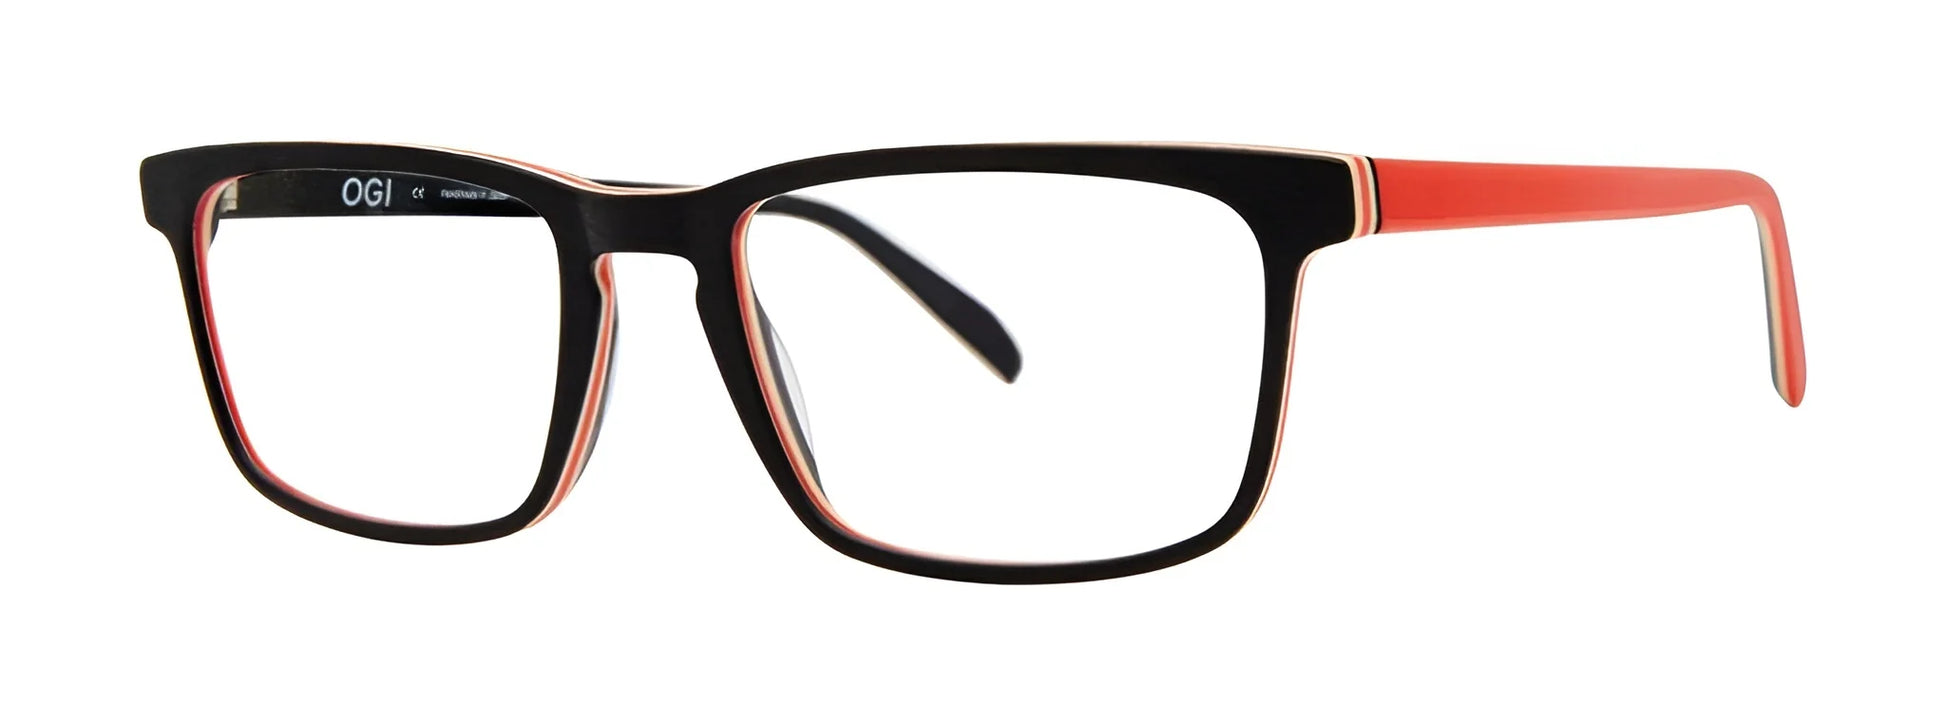 OGI BREEZERS Eyeglasses Black Wood / Neon Orange